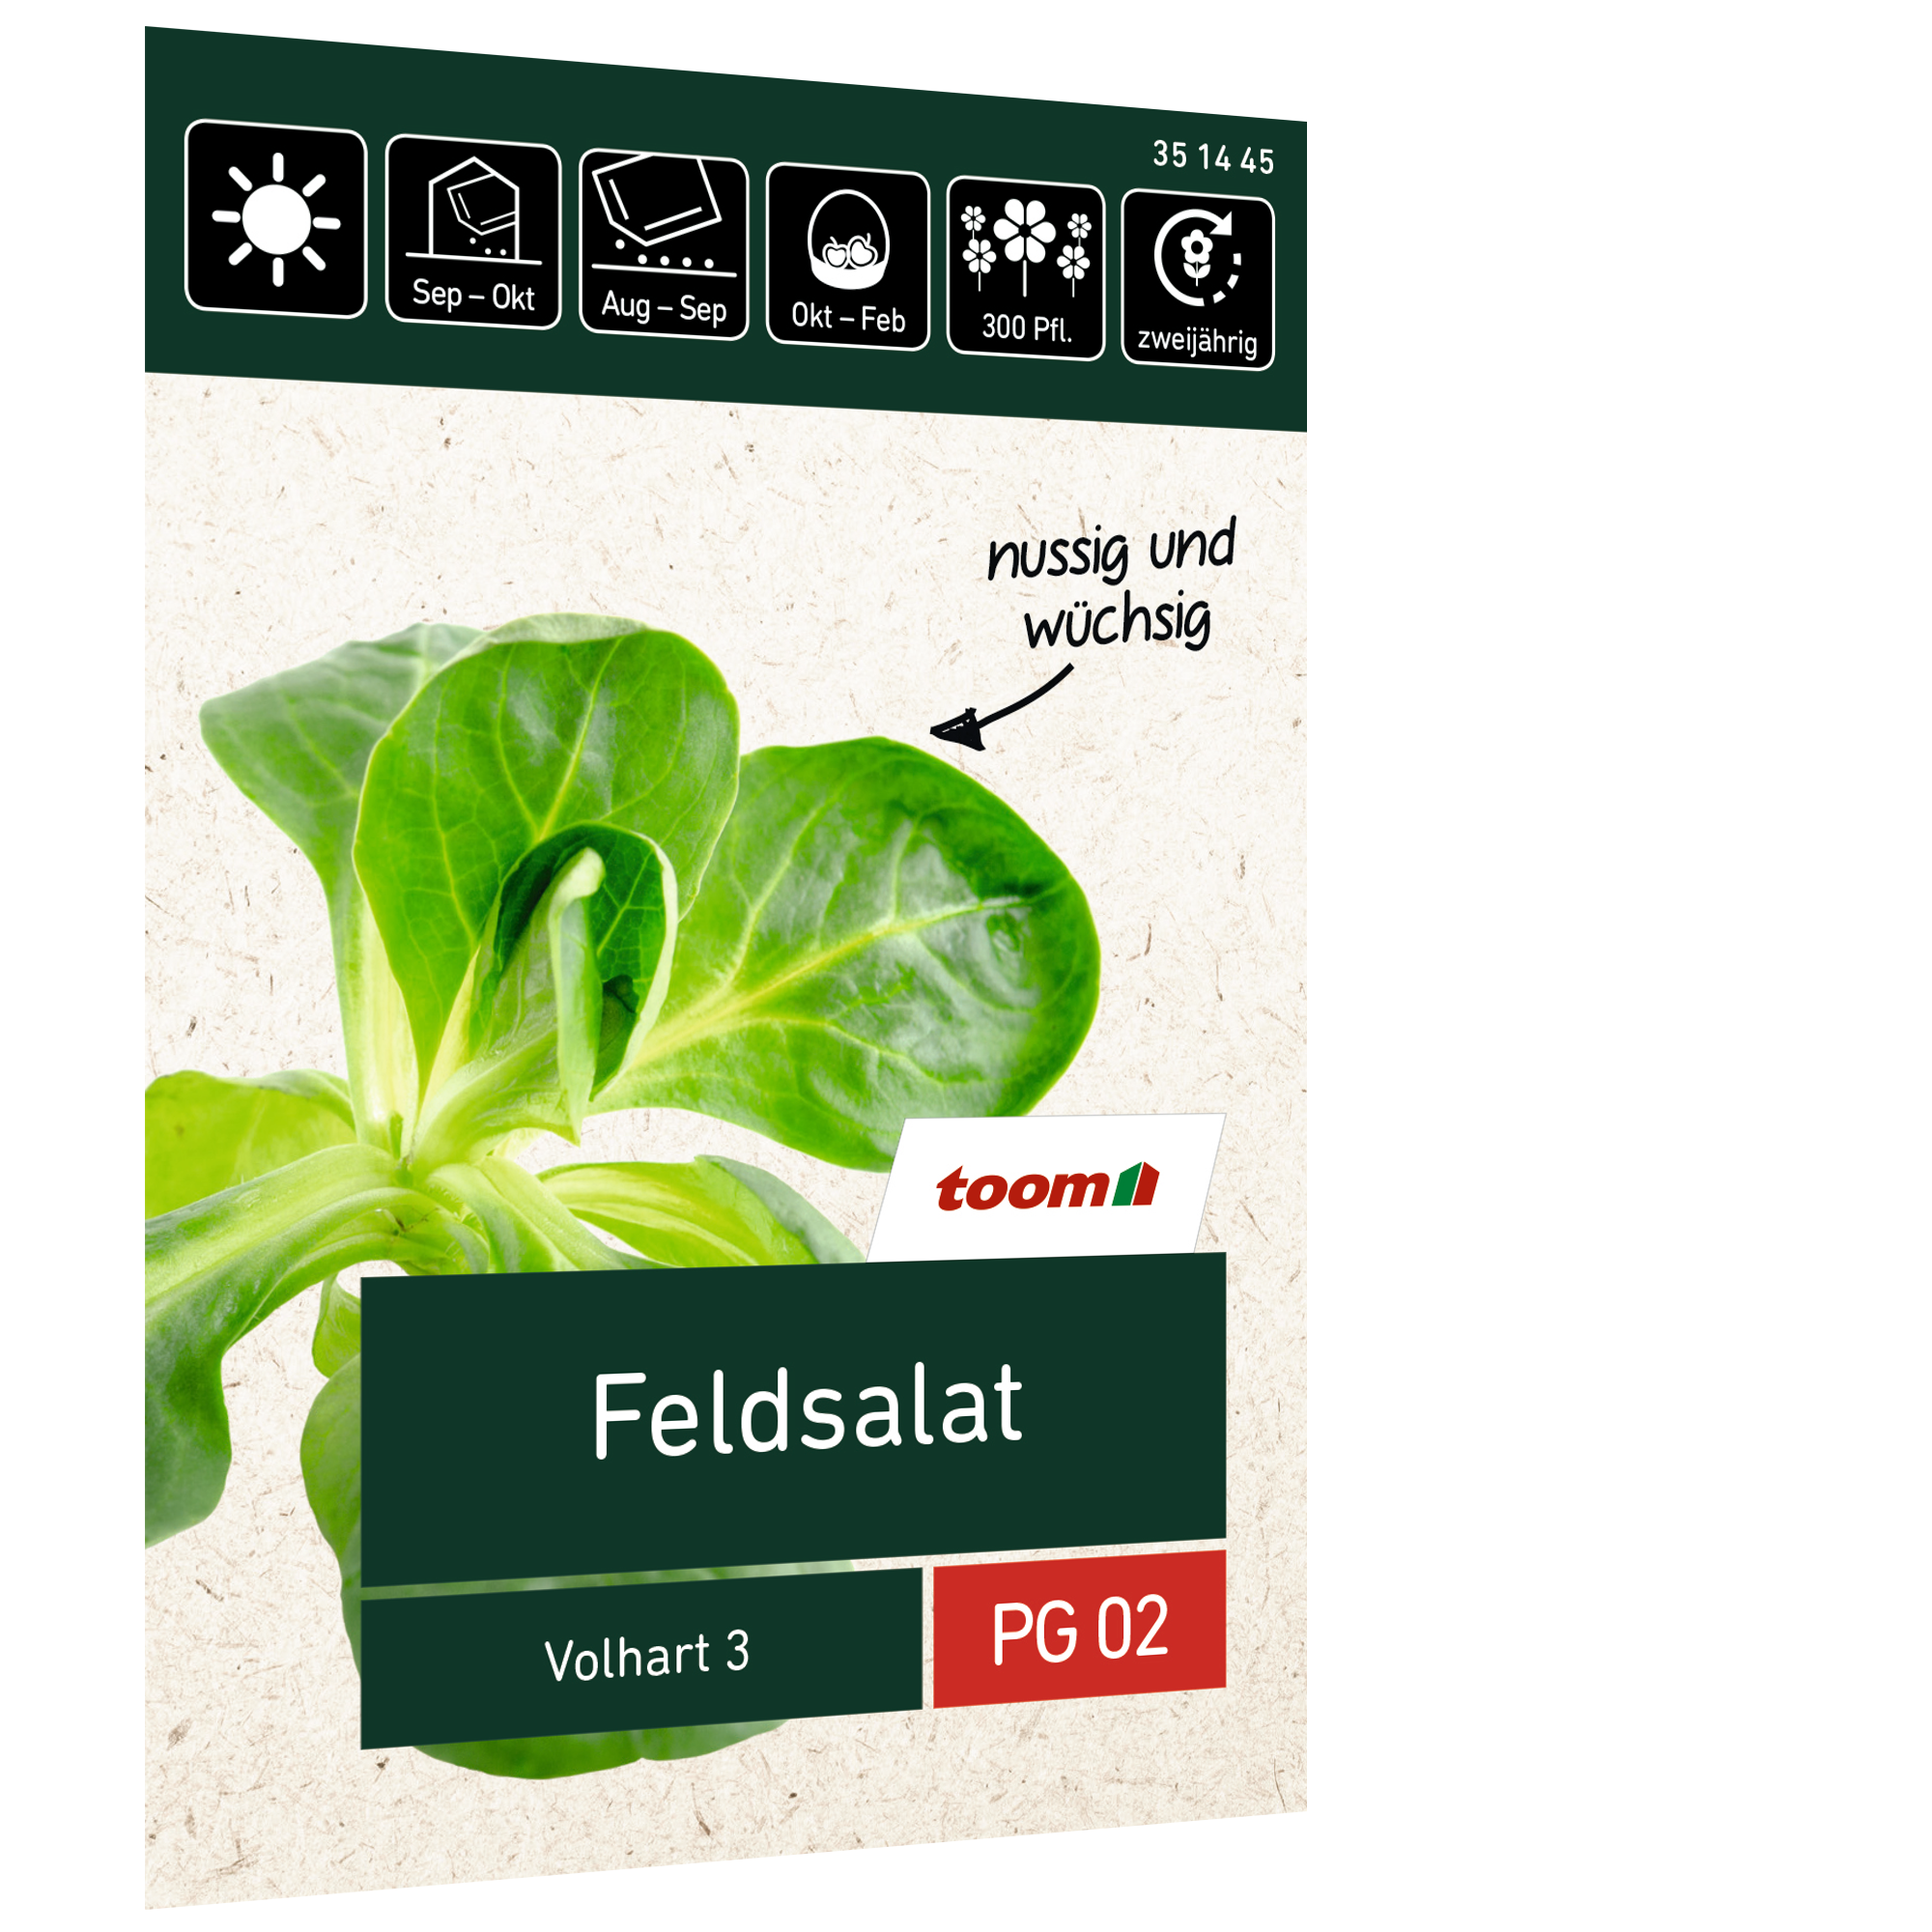 Feldsalat 'Volhart 3' + product picture